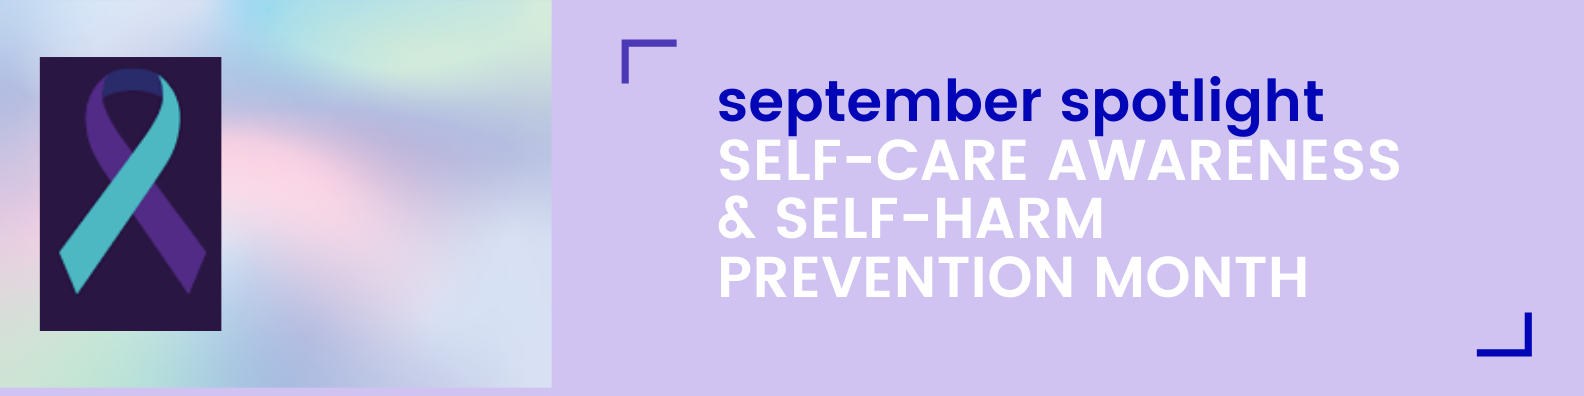 self care awareness banner